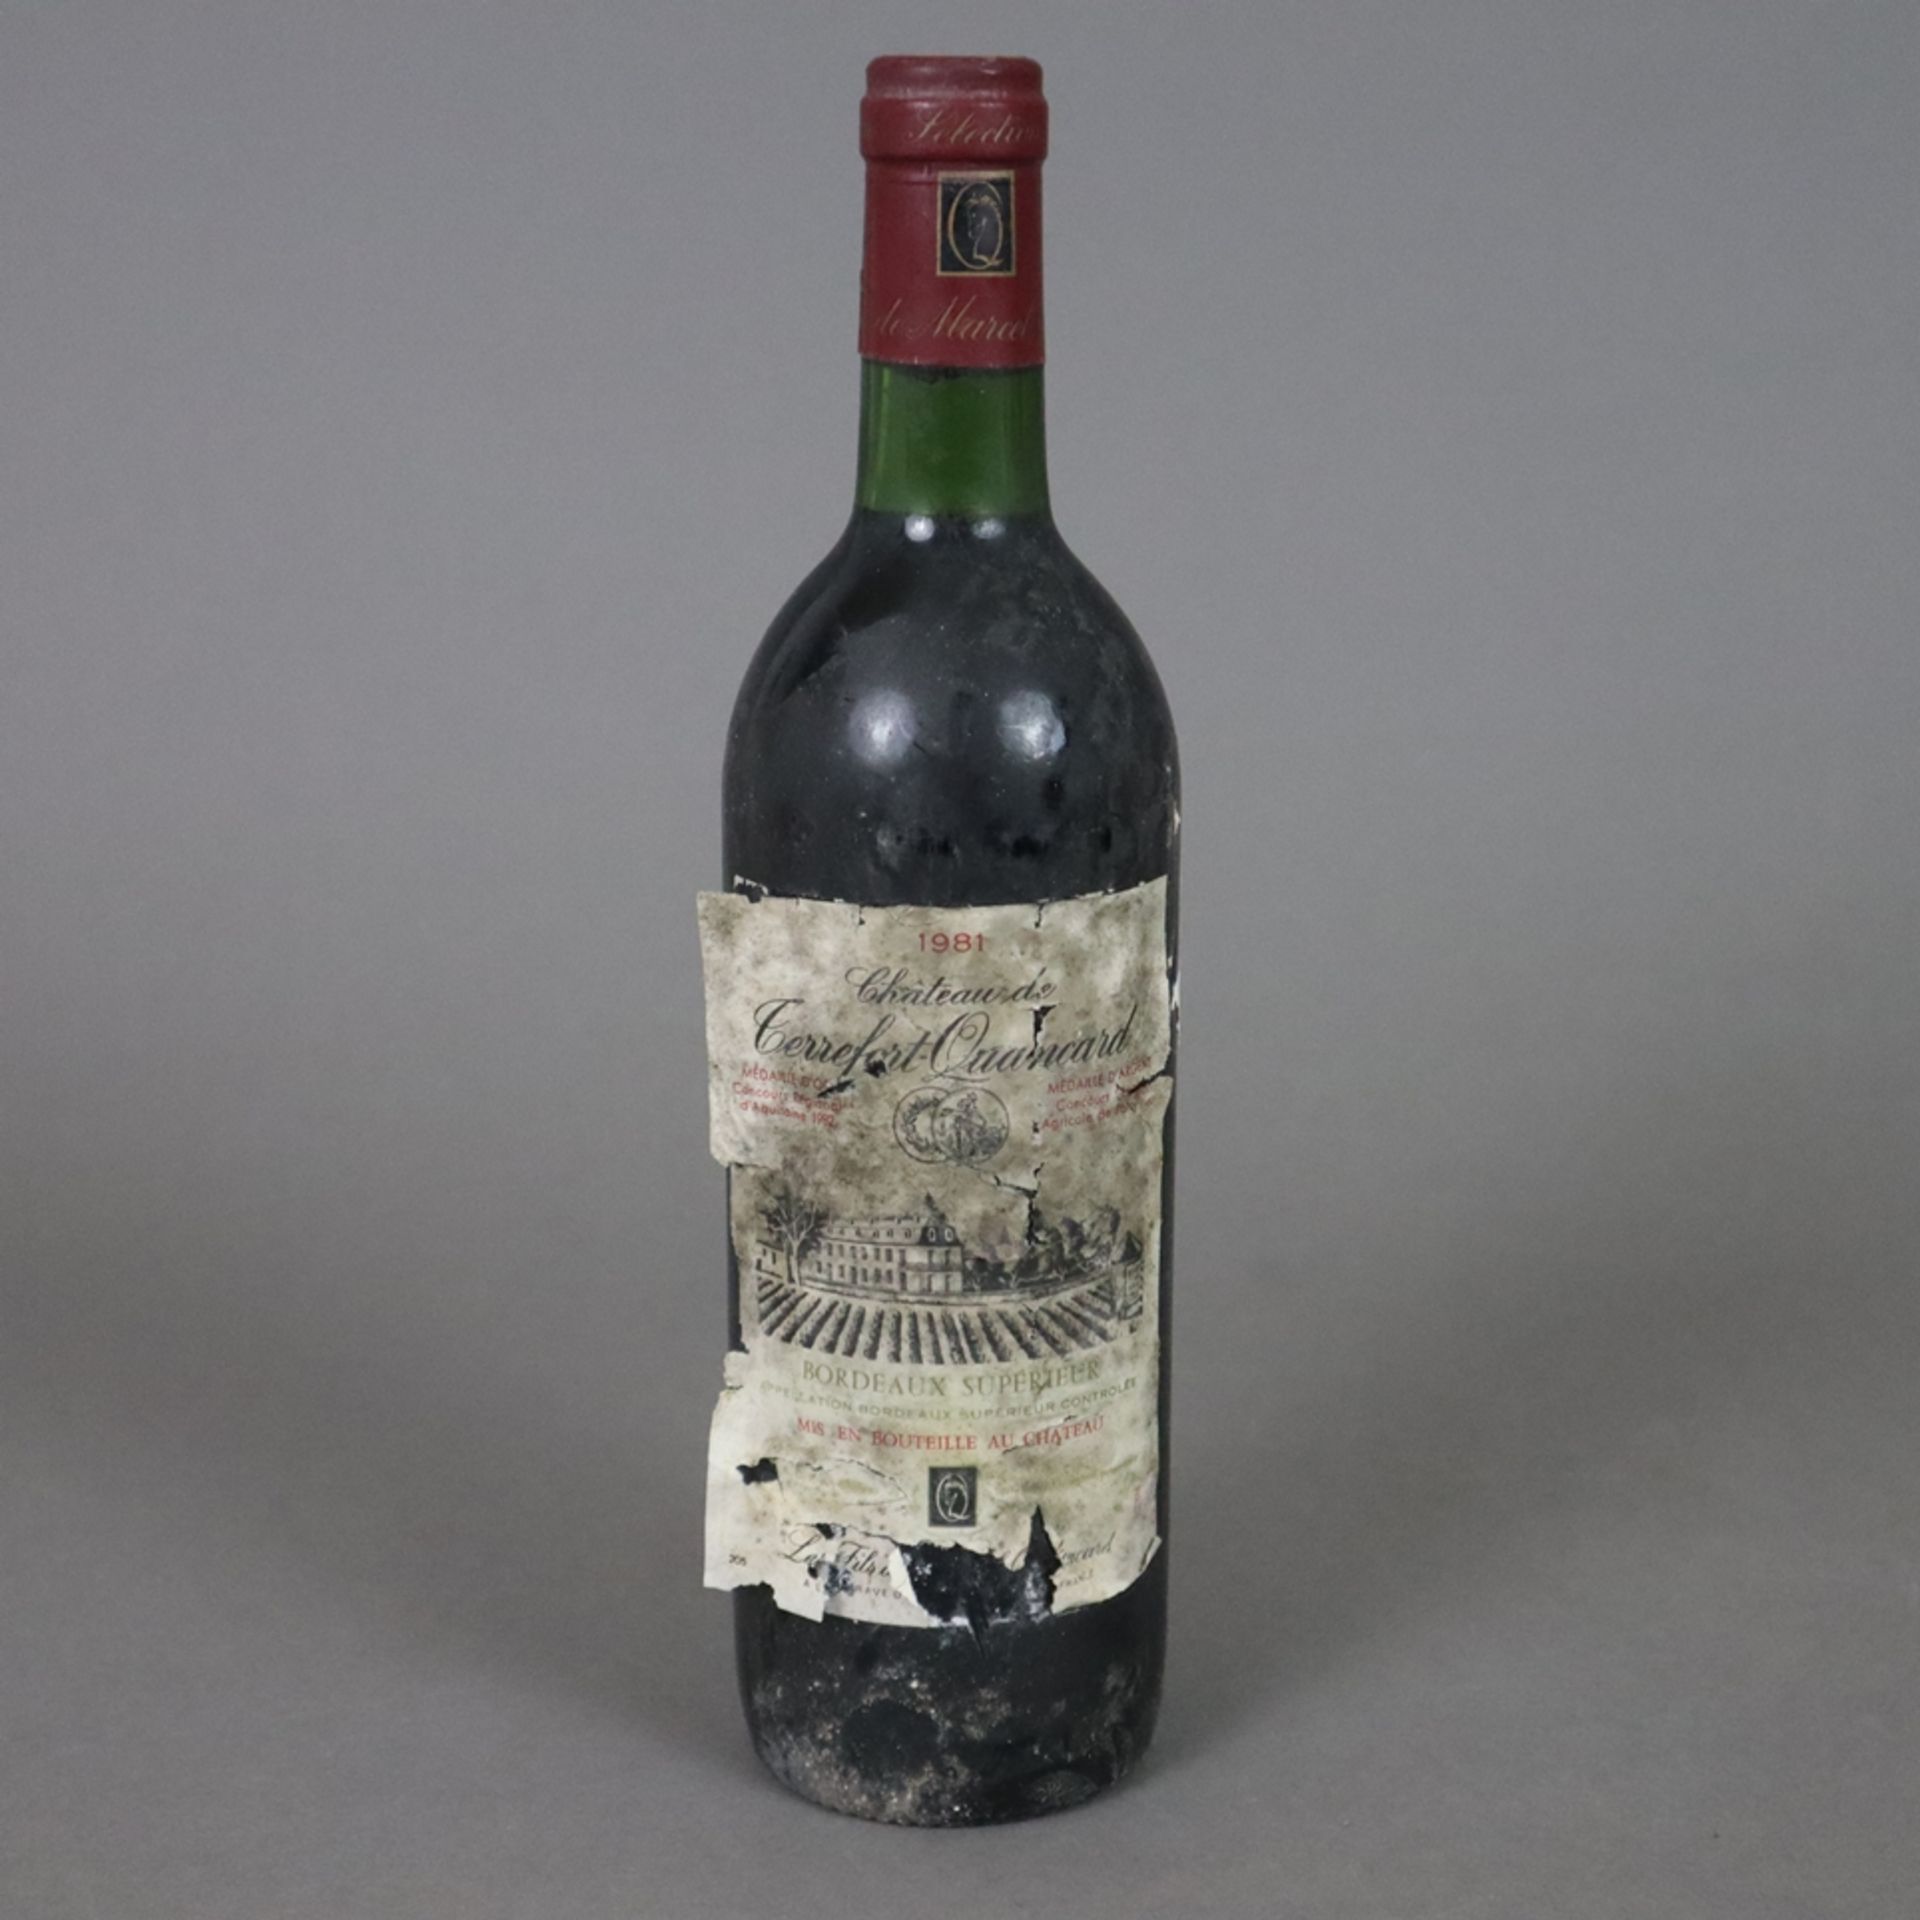 Wein - 1981 Château de Terrefort-Quancard, Bordeaux Supérieur, France, 0,7 L, Flasche verschmutzt,